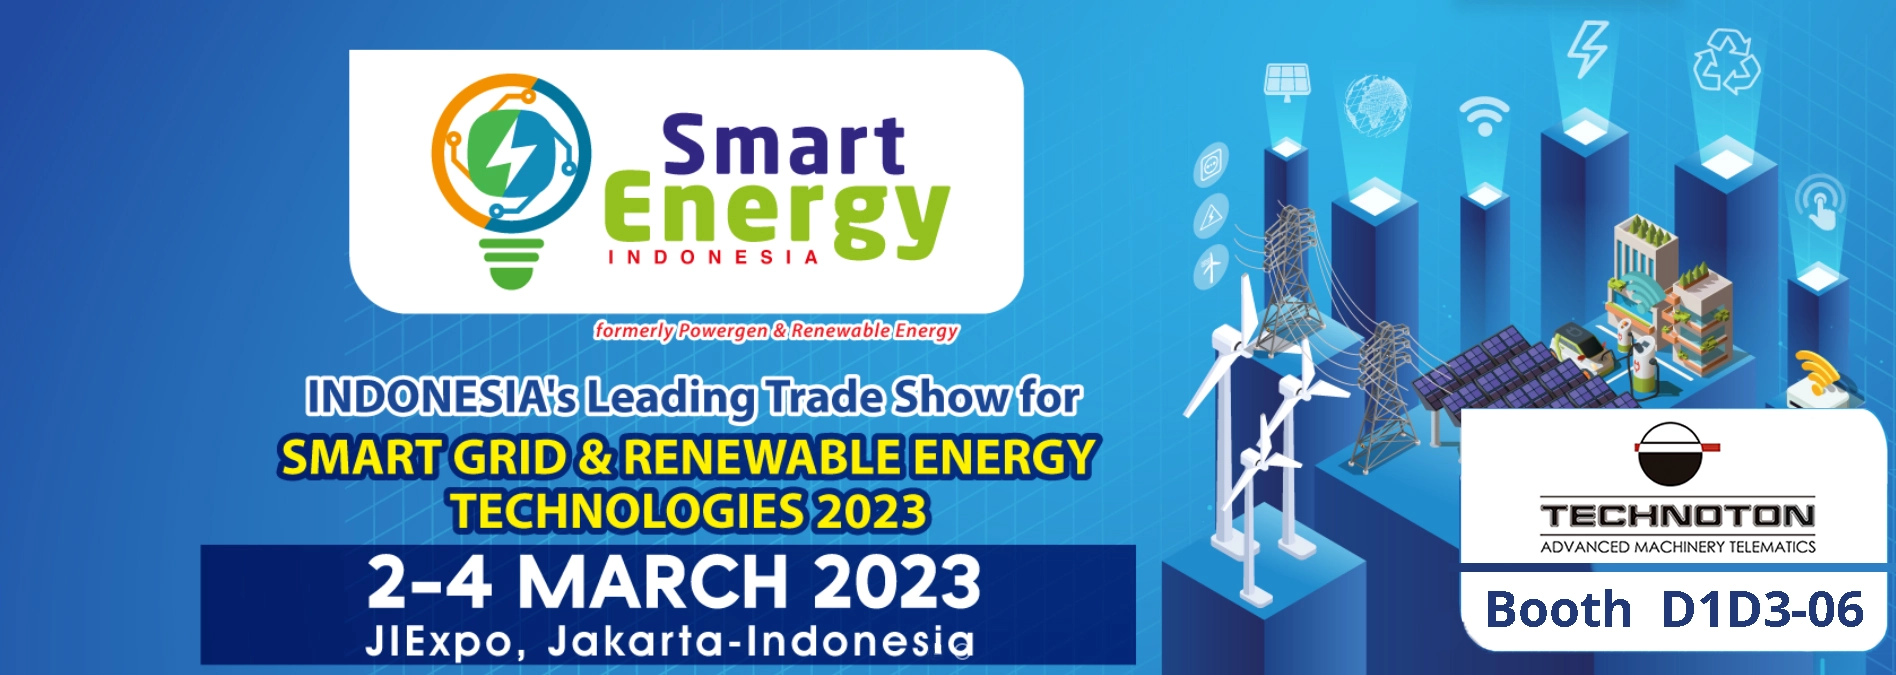 Technoton at Smart Energy Indonesia 2023